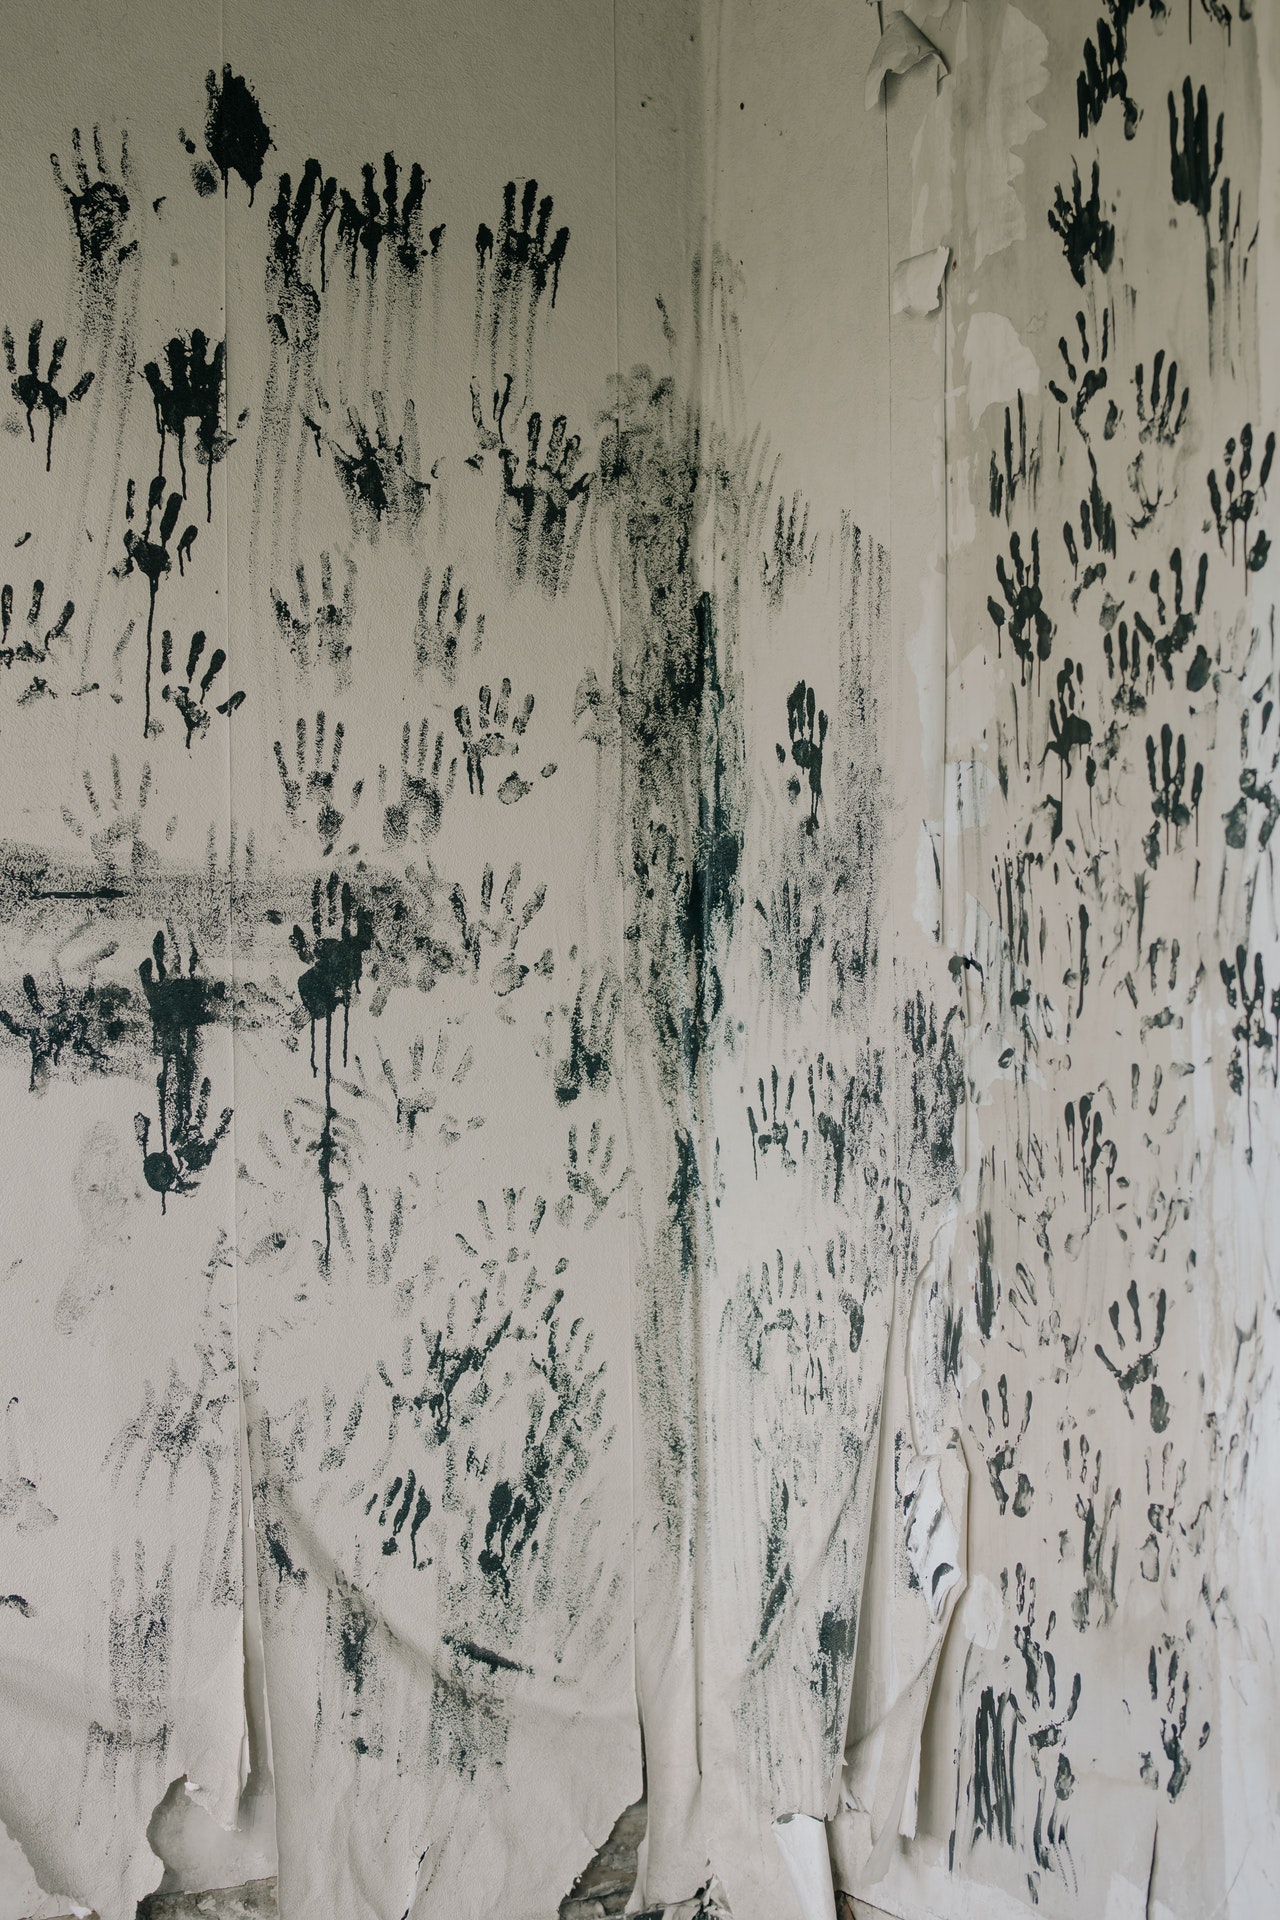 Ghost hand prints